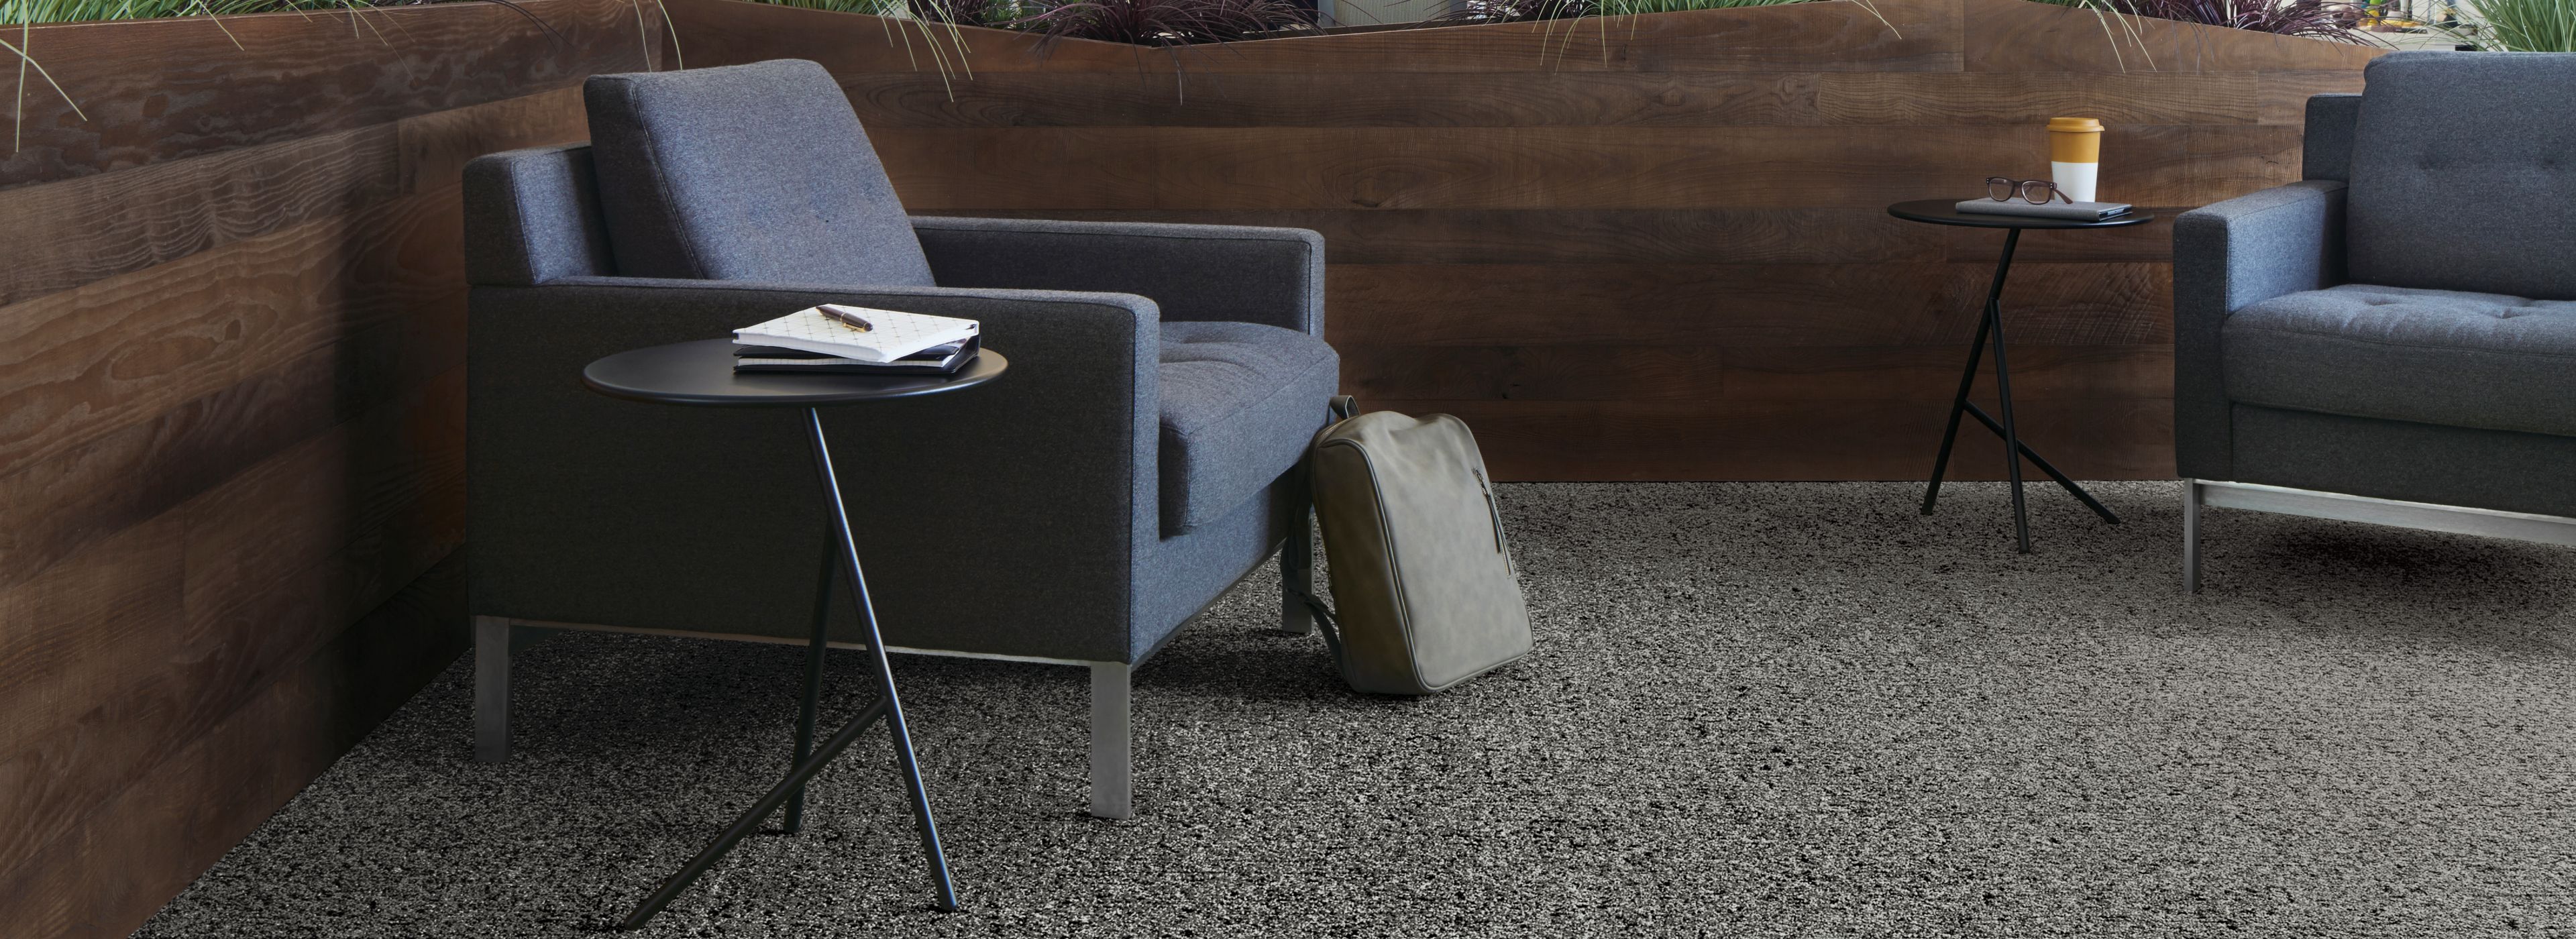 Interface Riverwalk carpet tile in lounge area imagen número 1